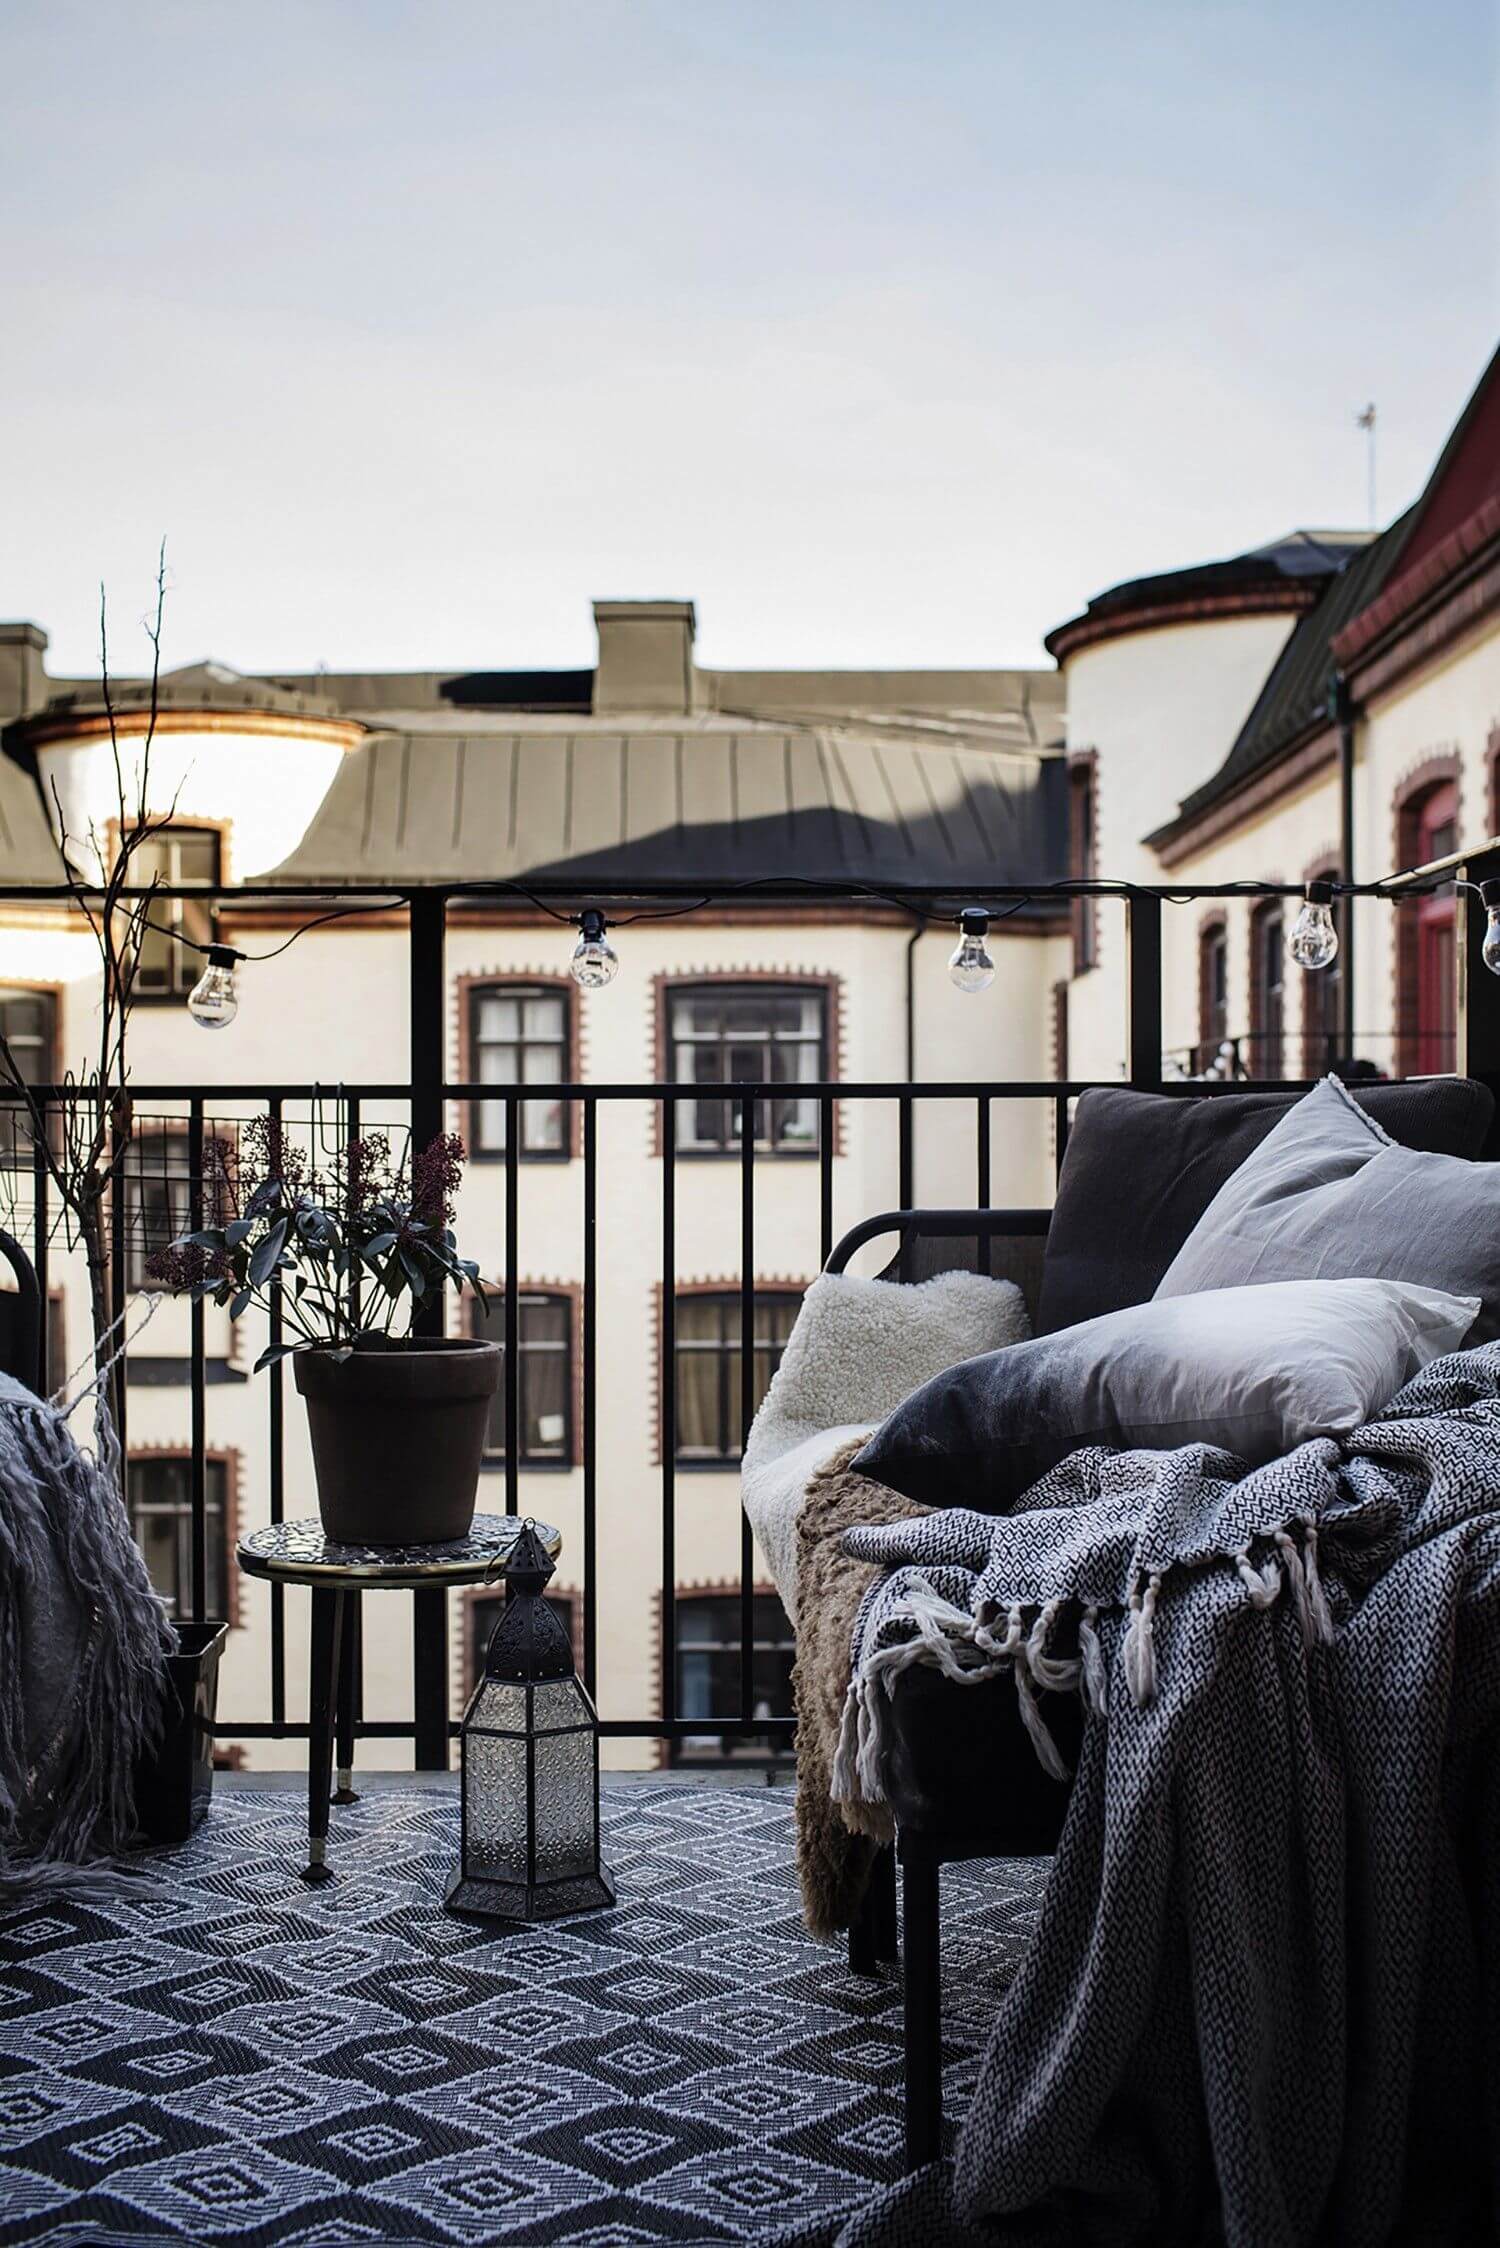 пледы и подушки на открытом балконе